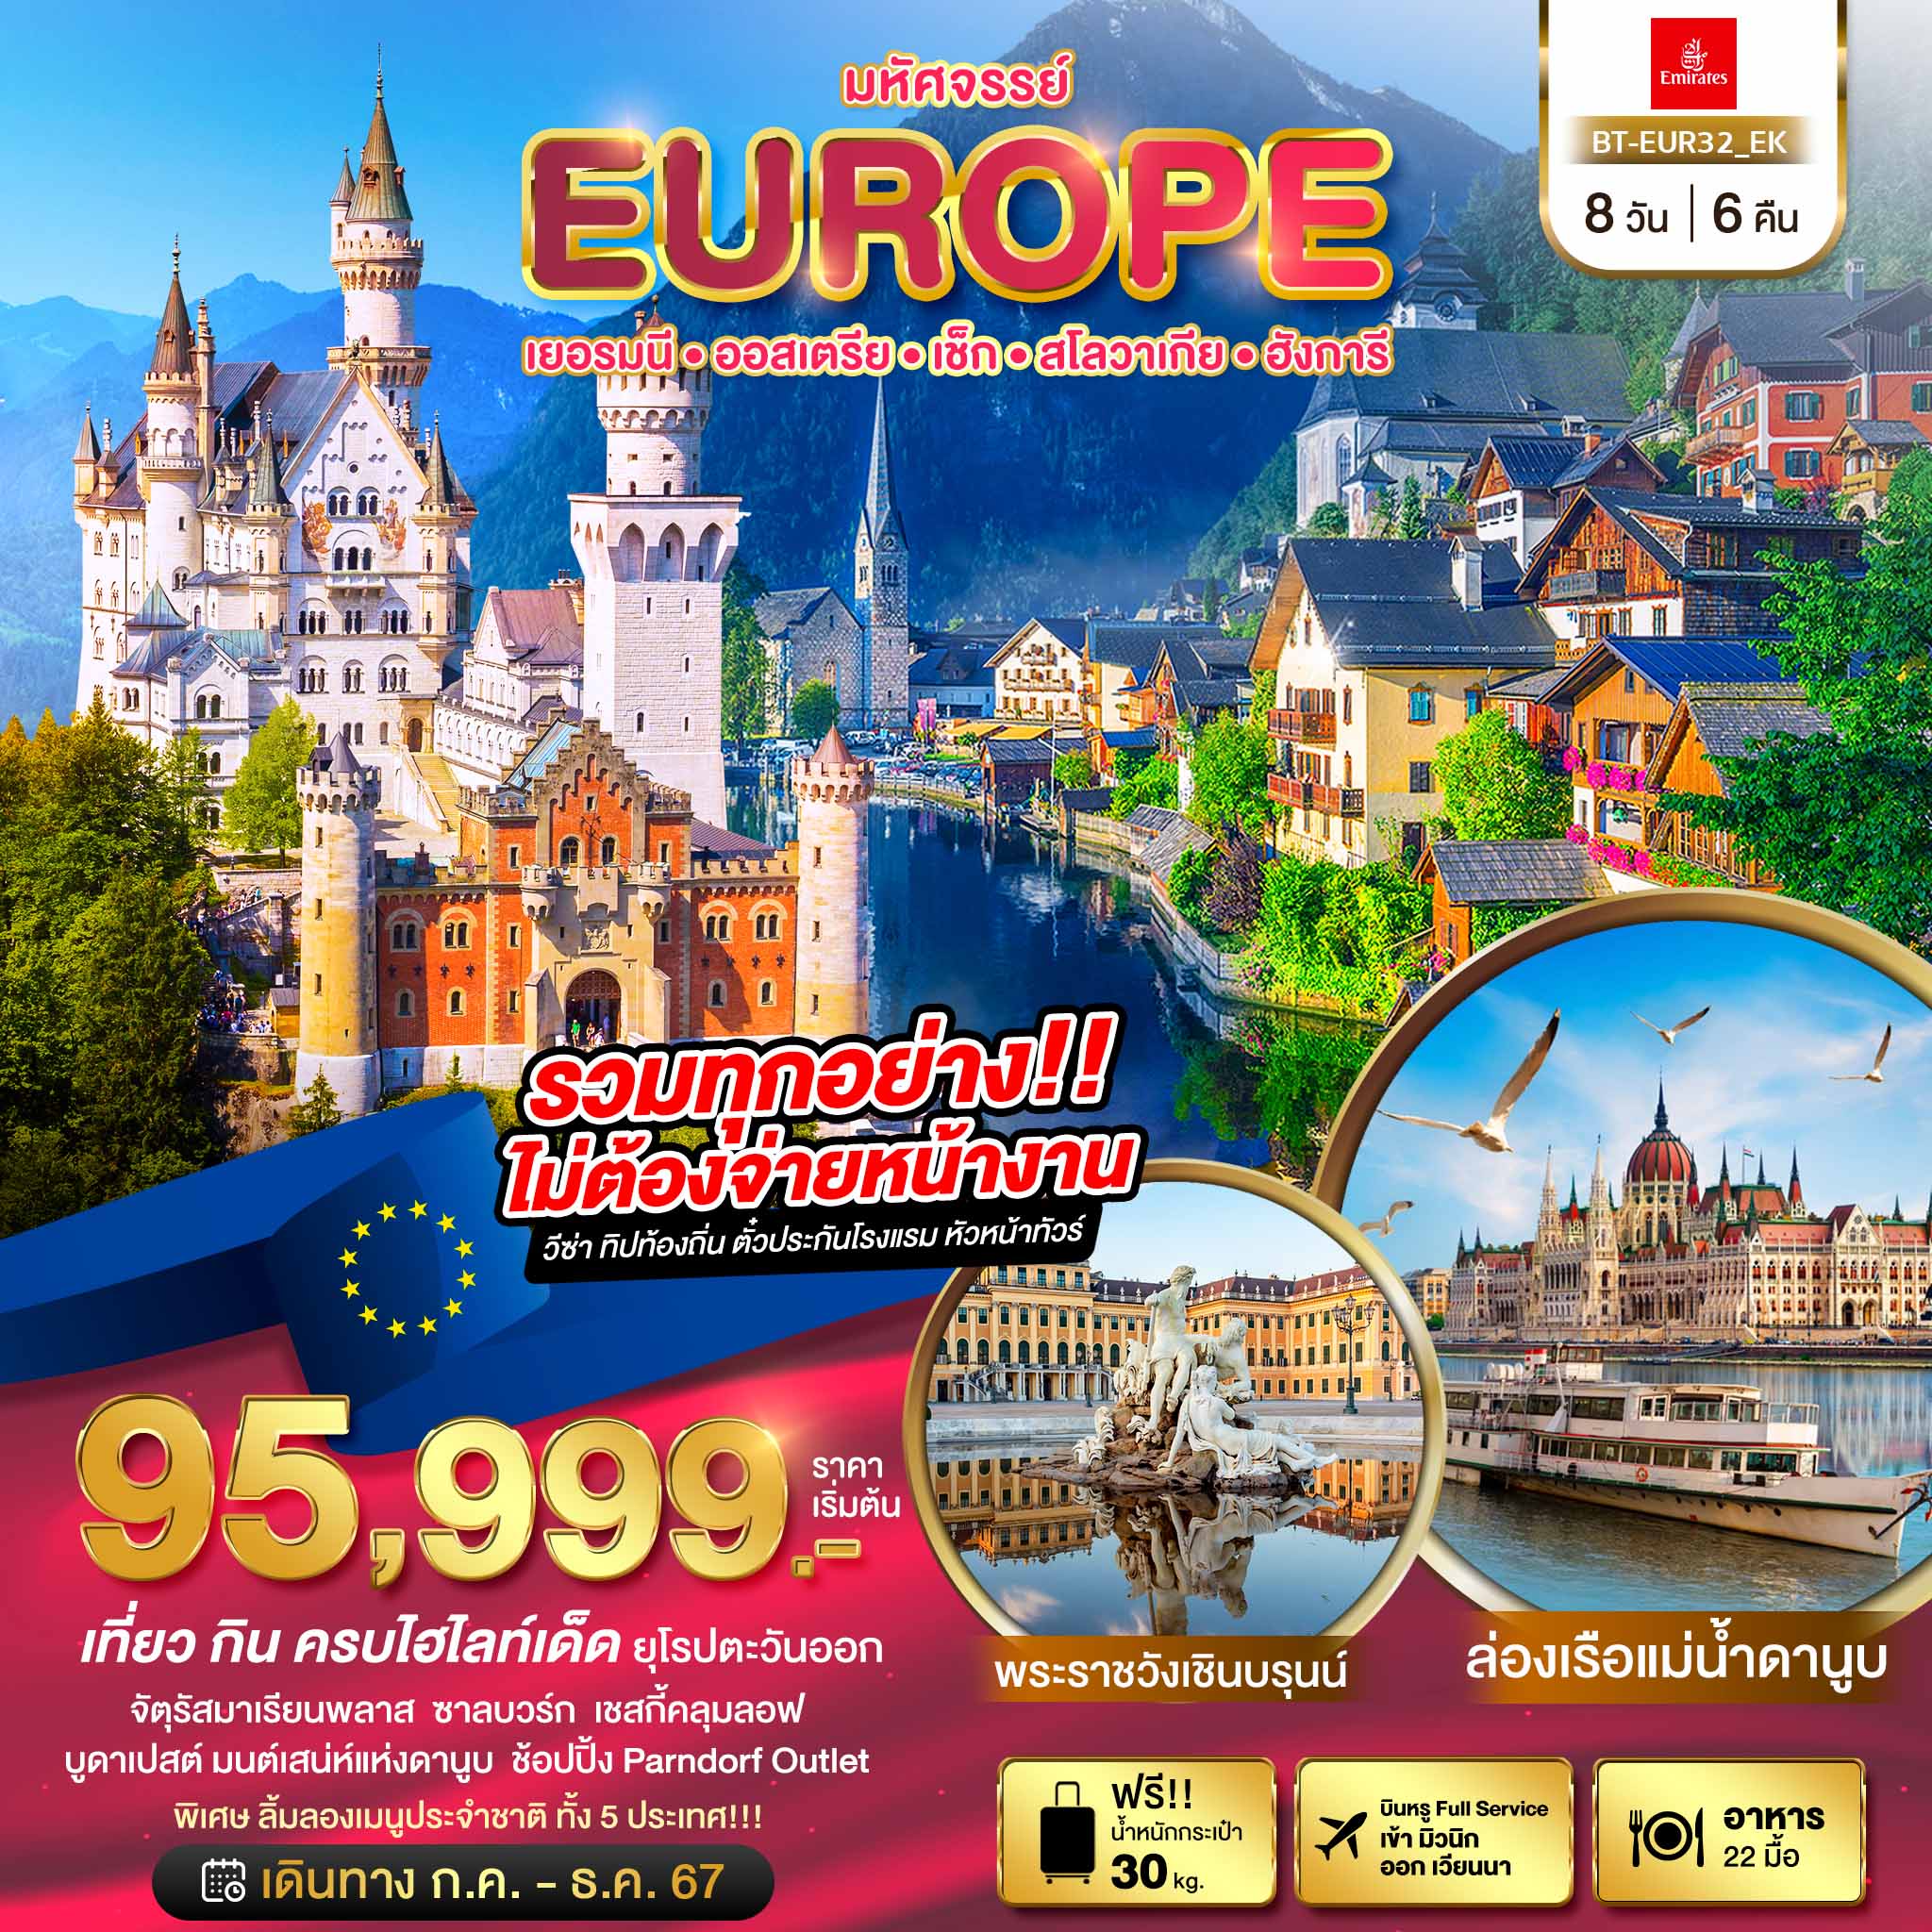 EUR05.02---BT-EUR32_EK East Europe มหัศจรรย์.ยุโรปตะวันออก เยอรมนี-ออสเตรีย-เช็ก-สโลวาเกีย-ฮังการี